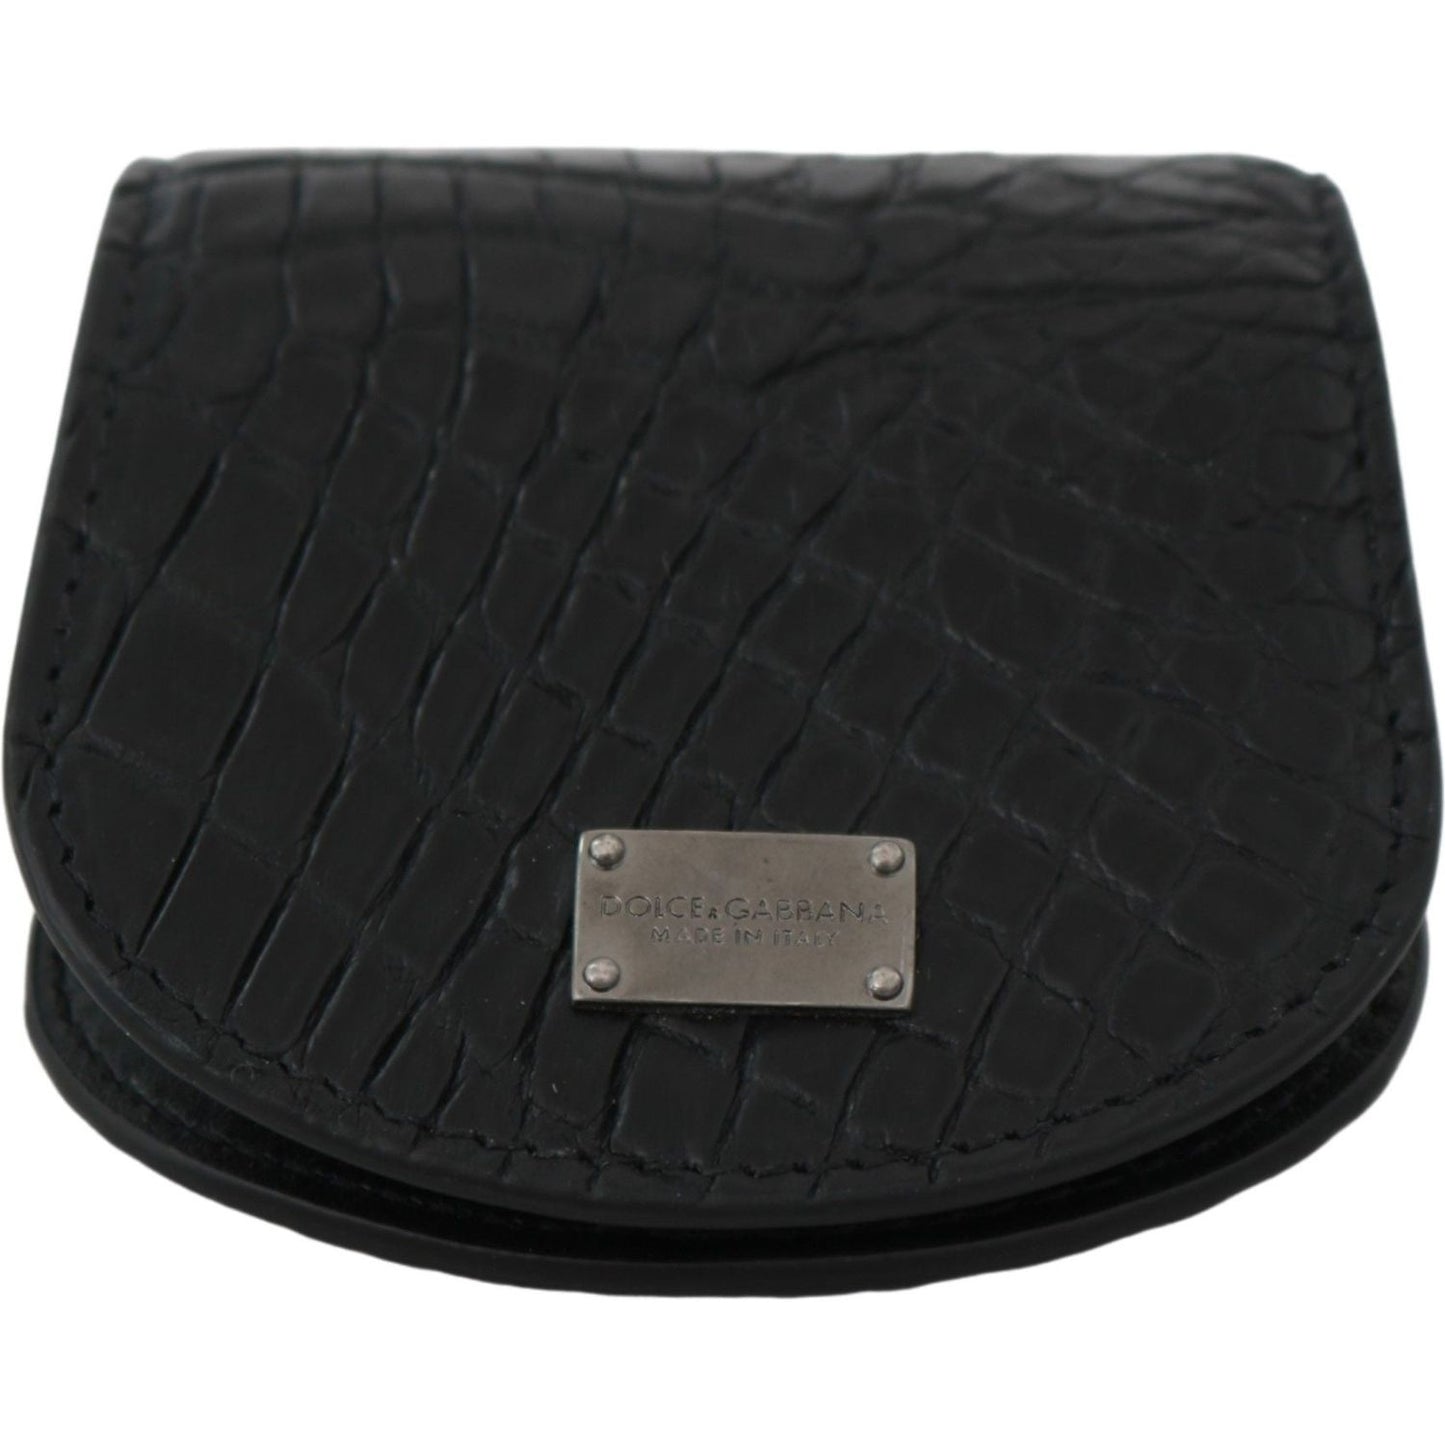 Dolce & Gabbana Sleek Black Leather Coin Case Wallet Condom Case black-exotic-skin-pocket-condom-case-holder IMG_0232-74824250-89a.jpg